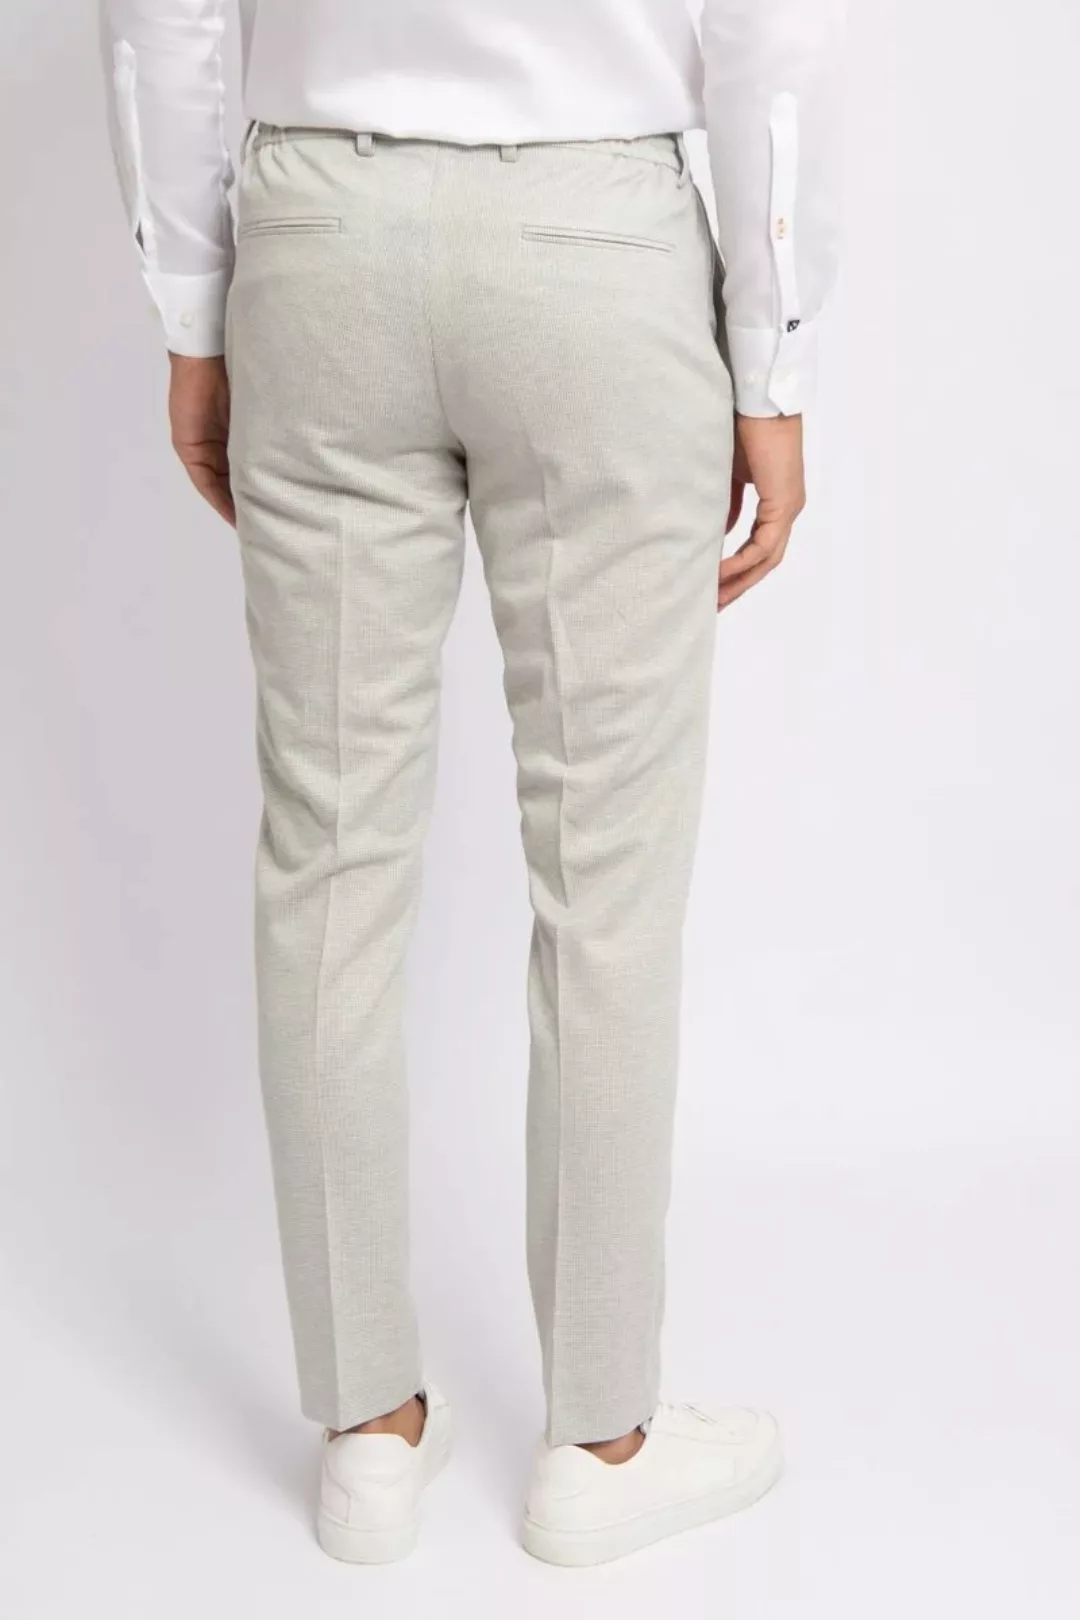 Suitable Dace Jersey Pantalon Hellgrün - Größe 52 günstig online kaufen